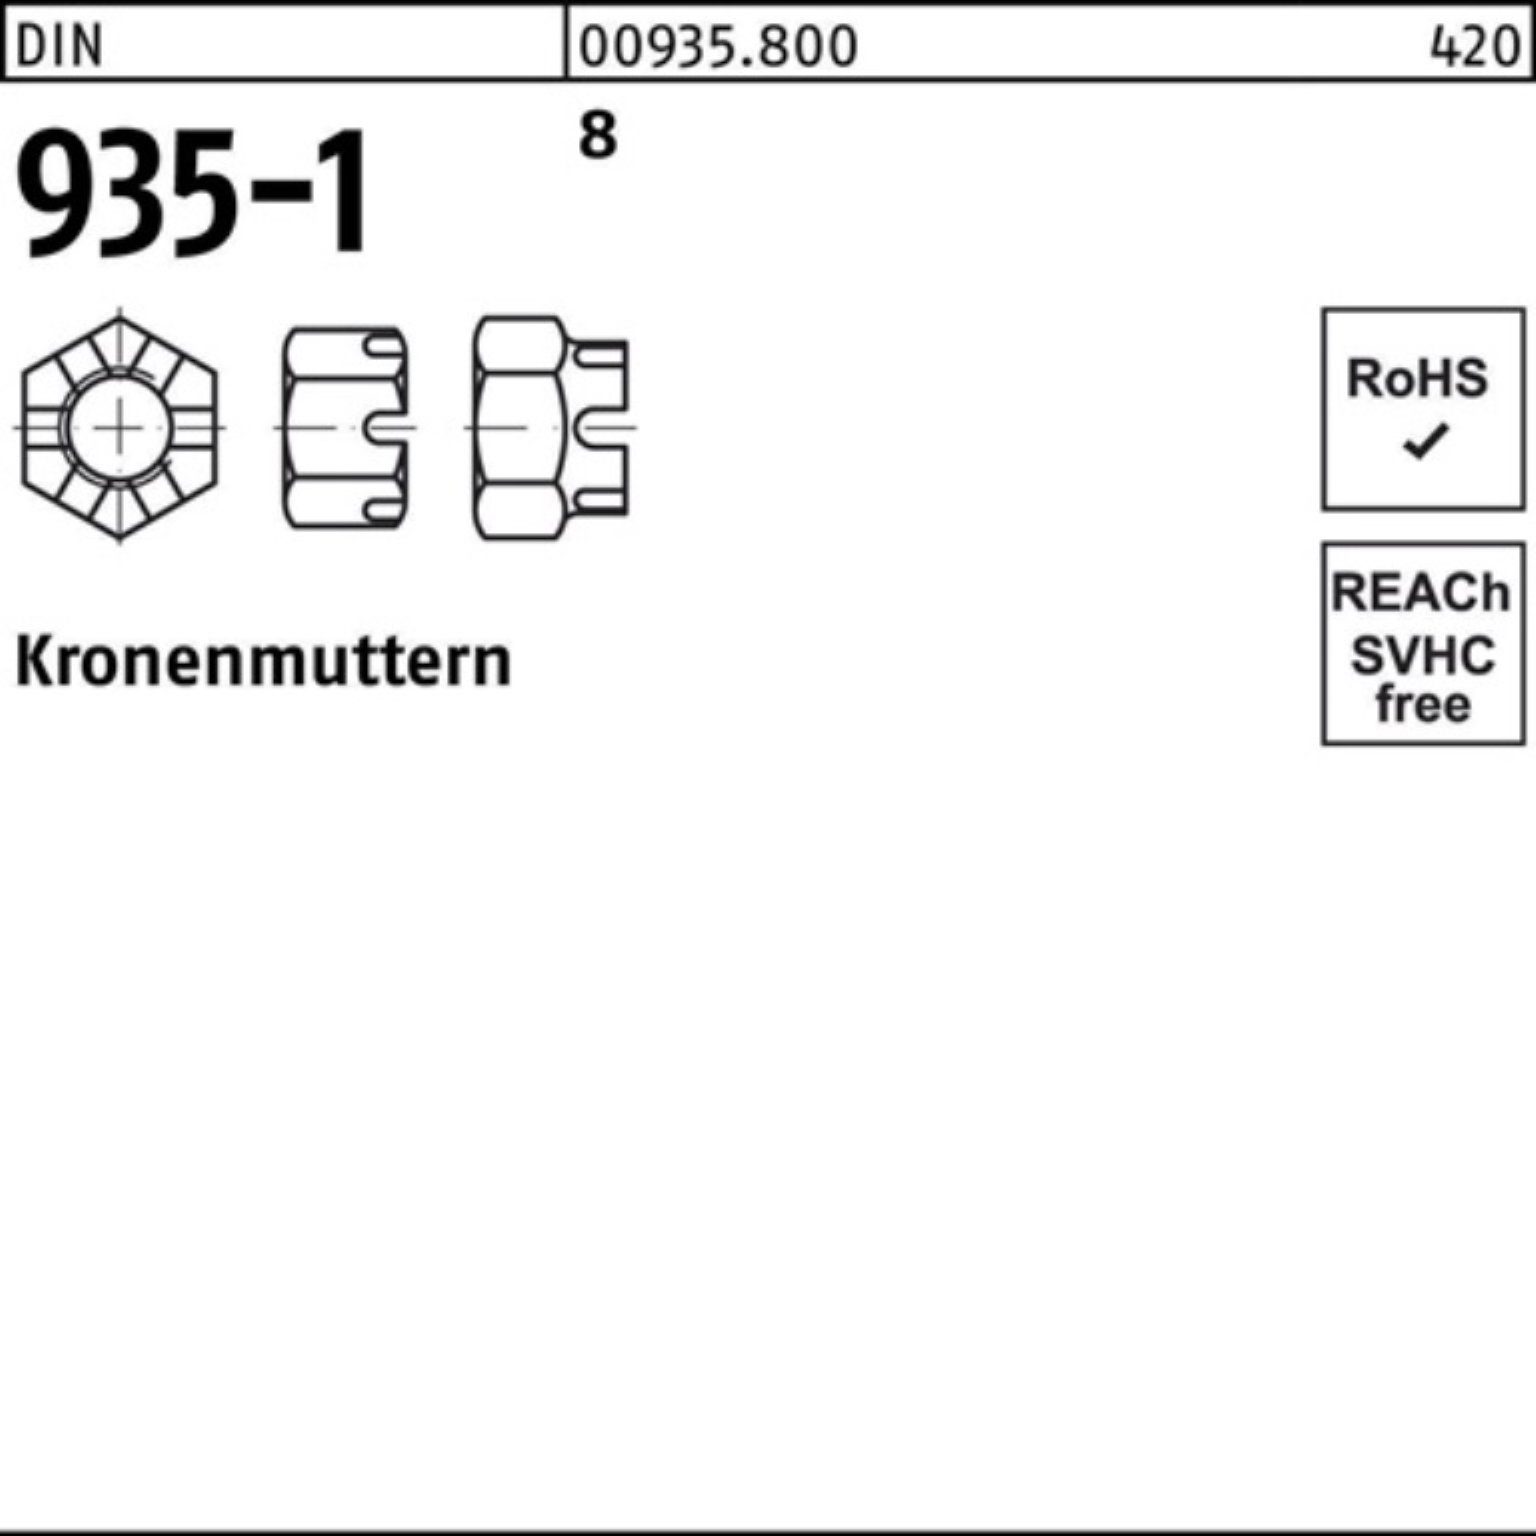 Reyher Kronenmutter 100er Pack Kronenmutter DIN 935-1 M24 8 25 Stück DIN 935-1 8 Kronenmu